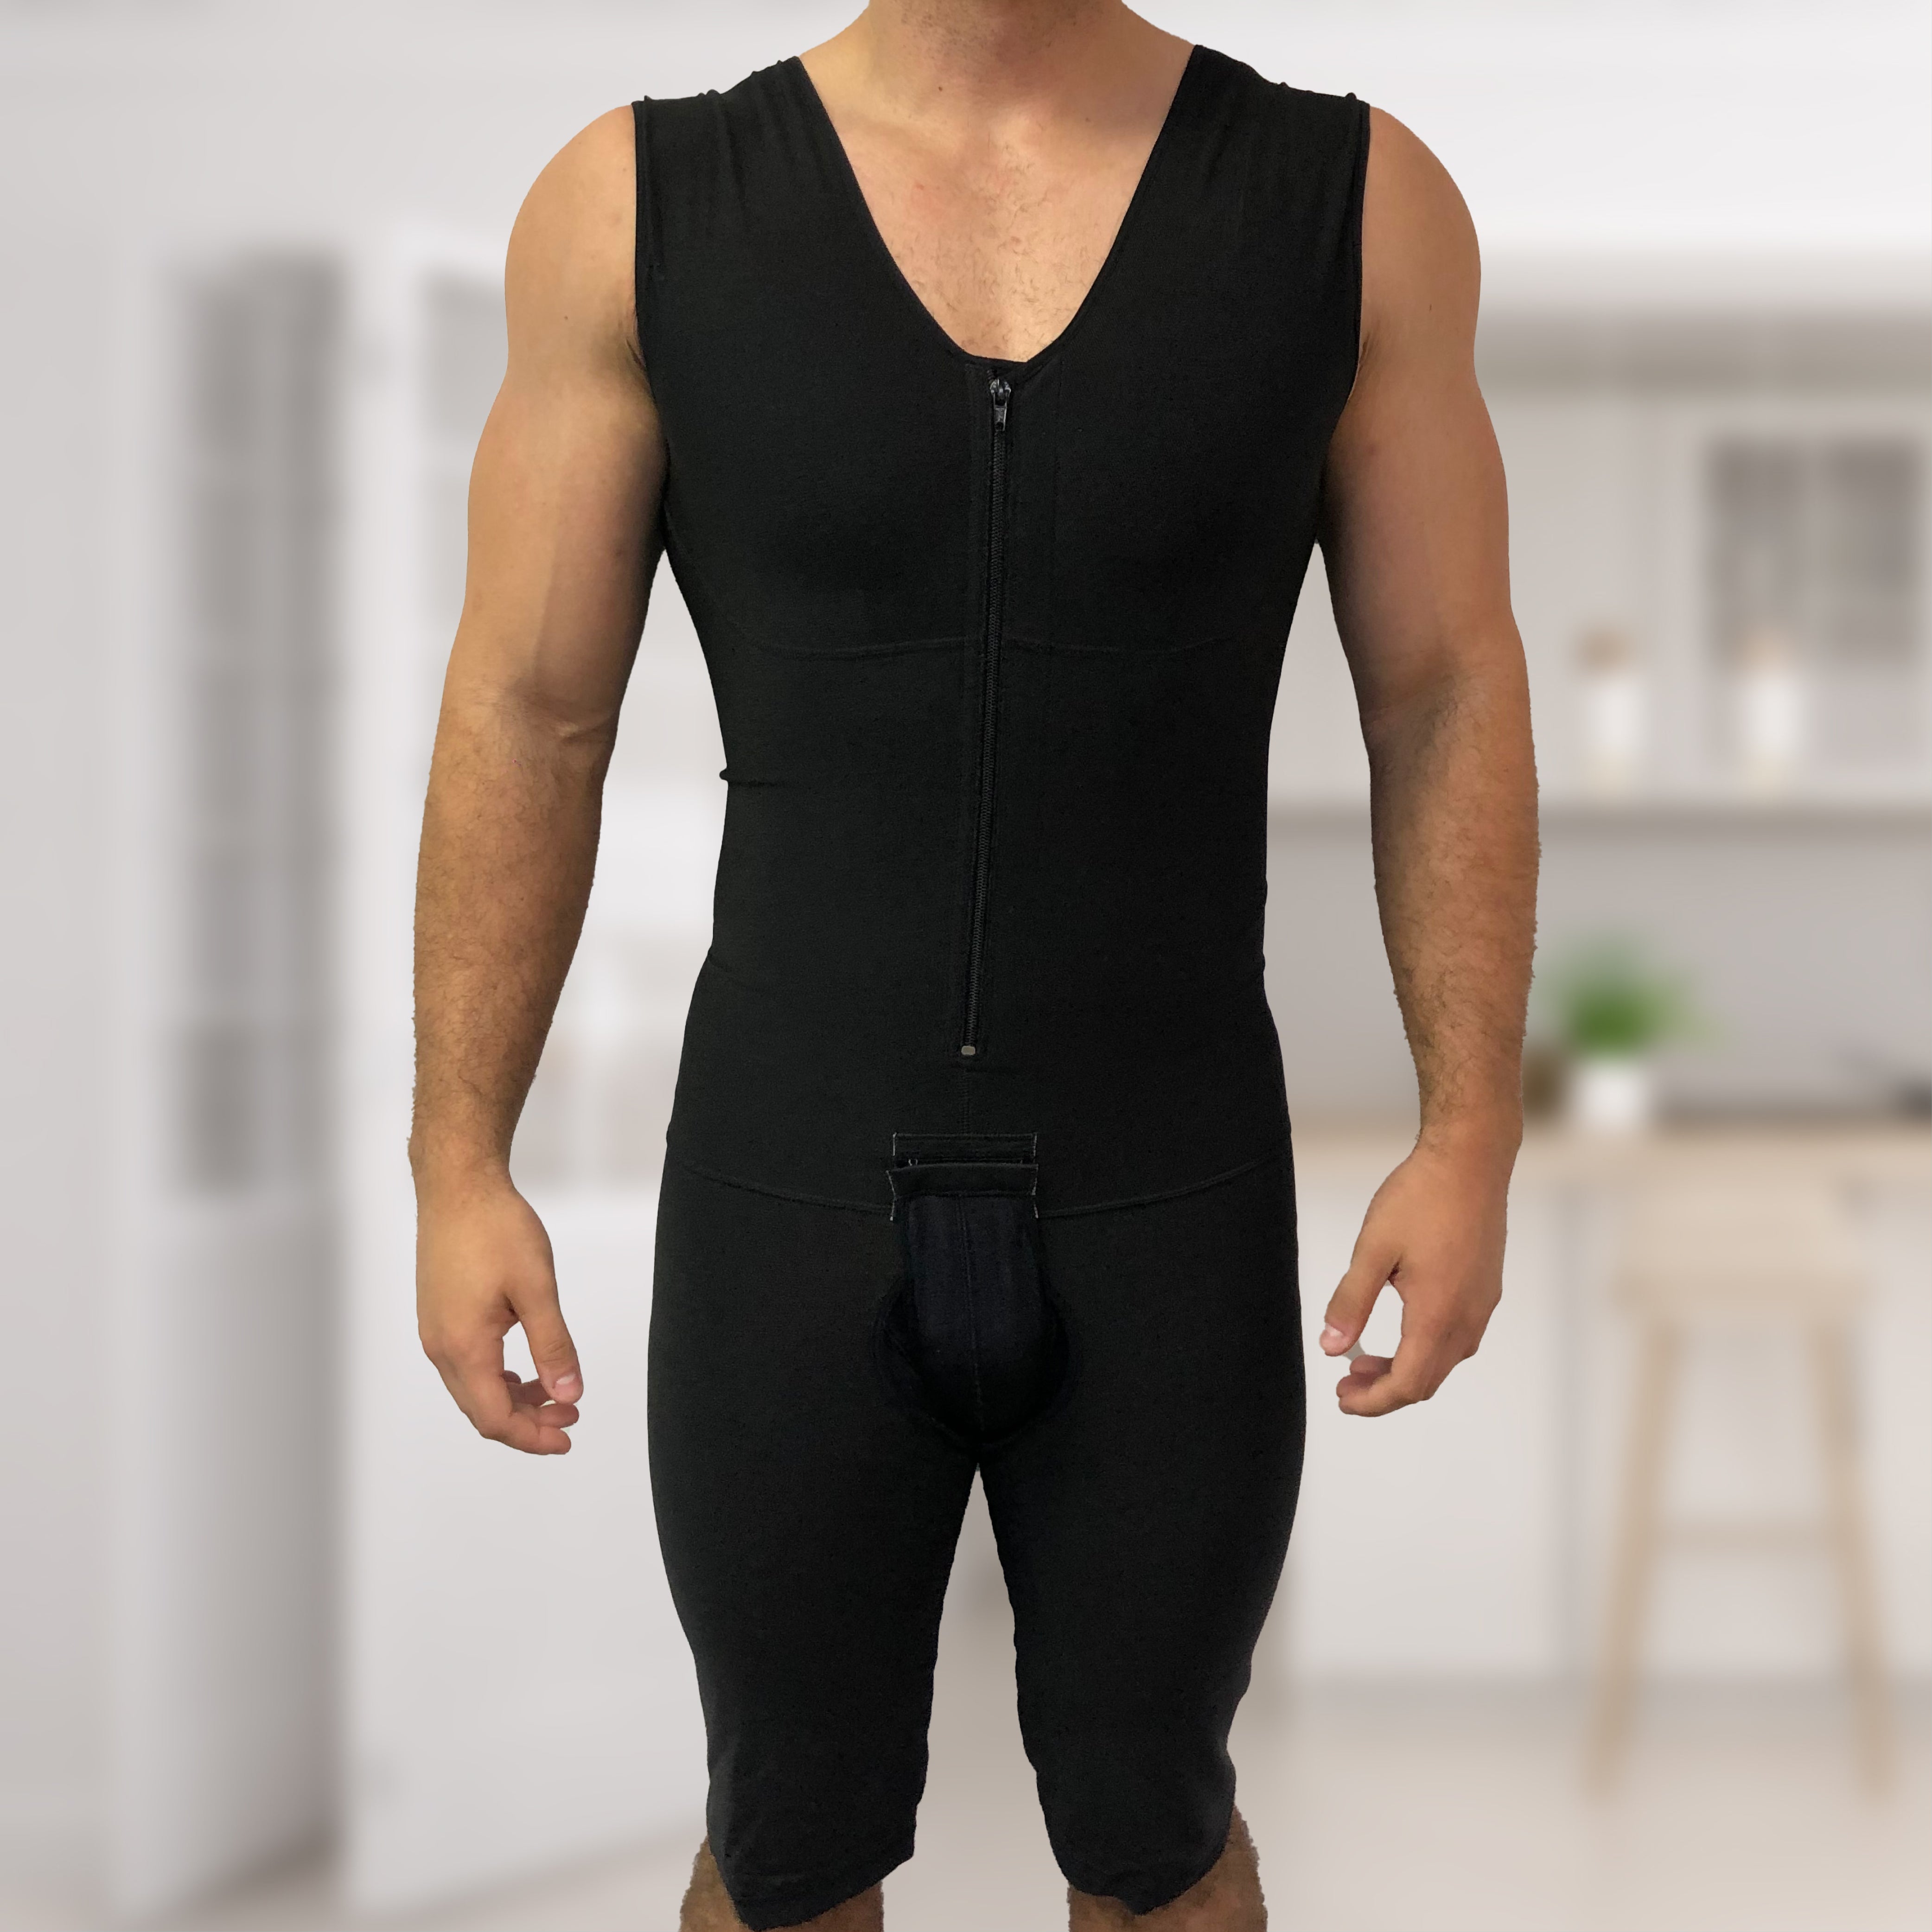 Men's Post-Surgery Recovery Body Garment - Shop Now – Dr. Shape